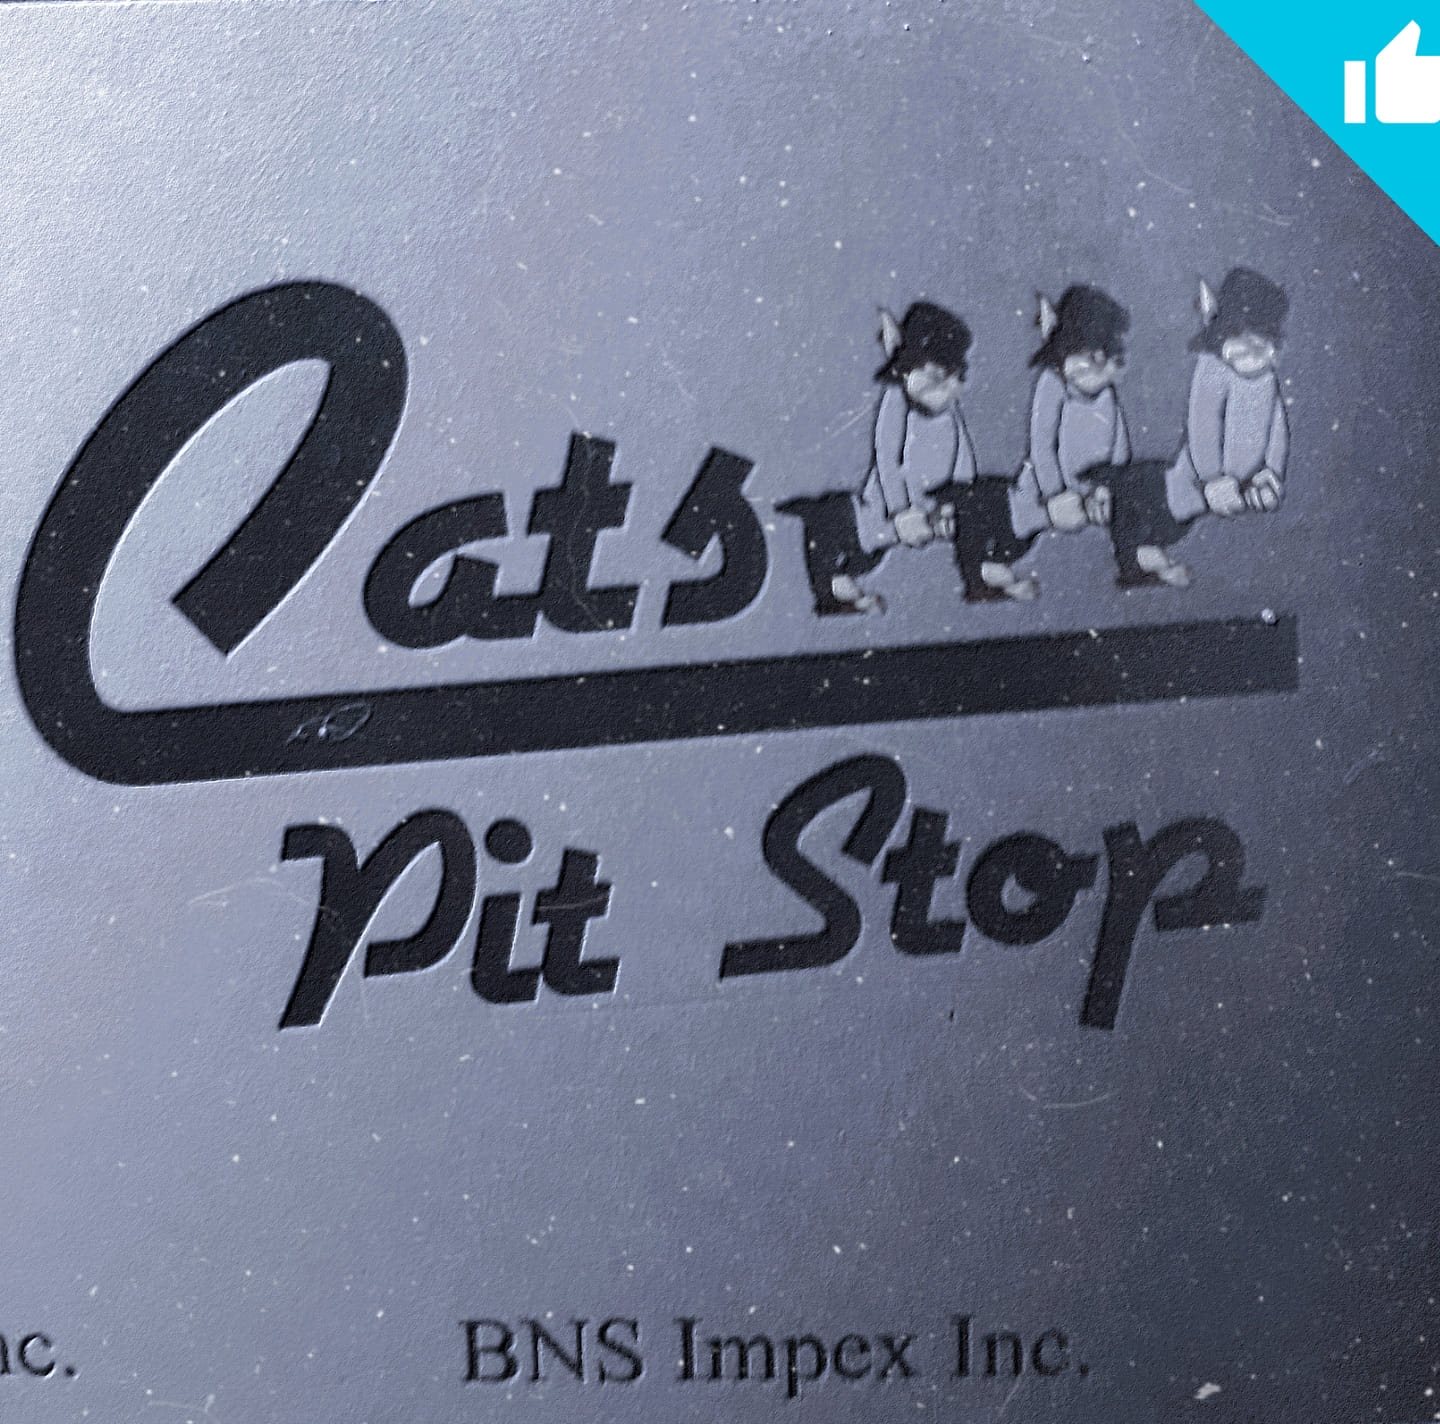 Cat's Pitt Stop